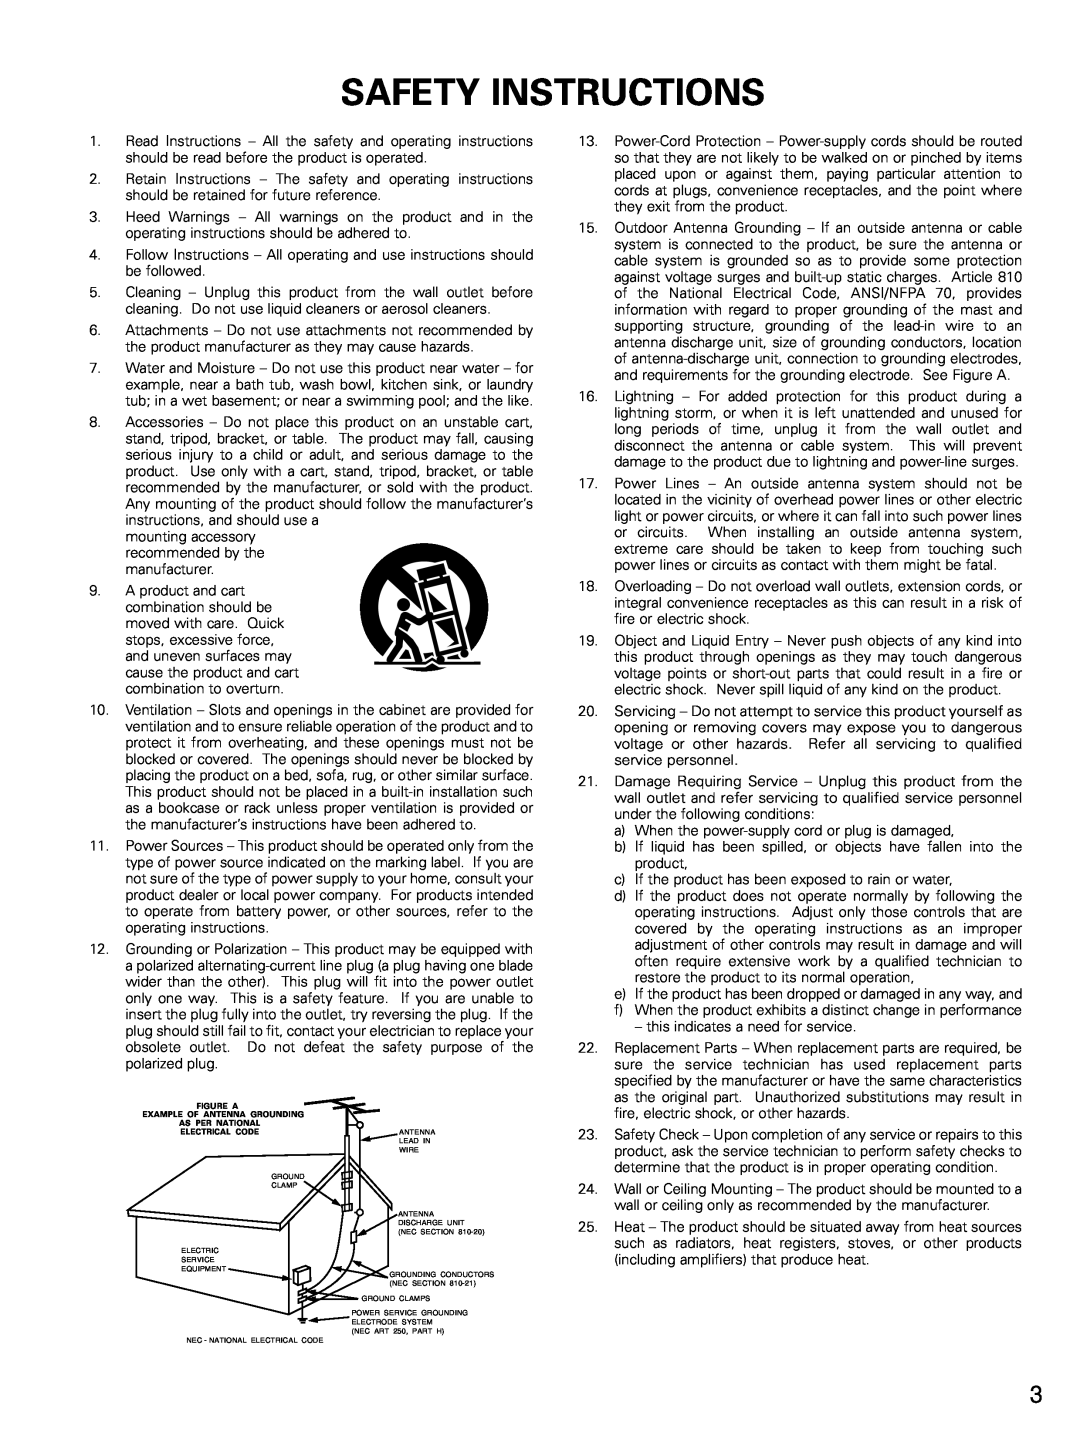 Denon ADV-M51, D-M51DVS, ADVM51 manual Safety Instructions 